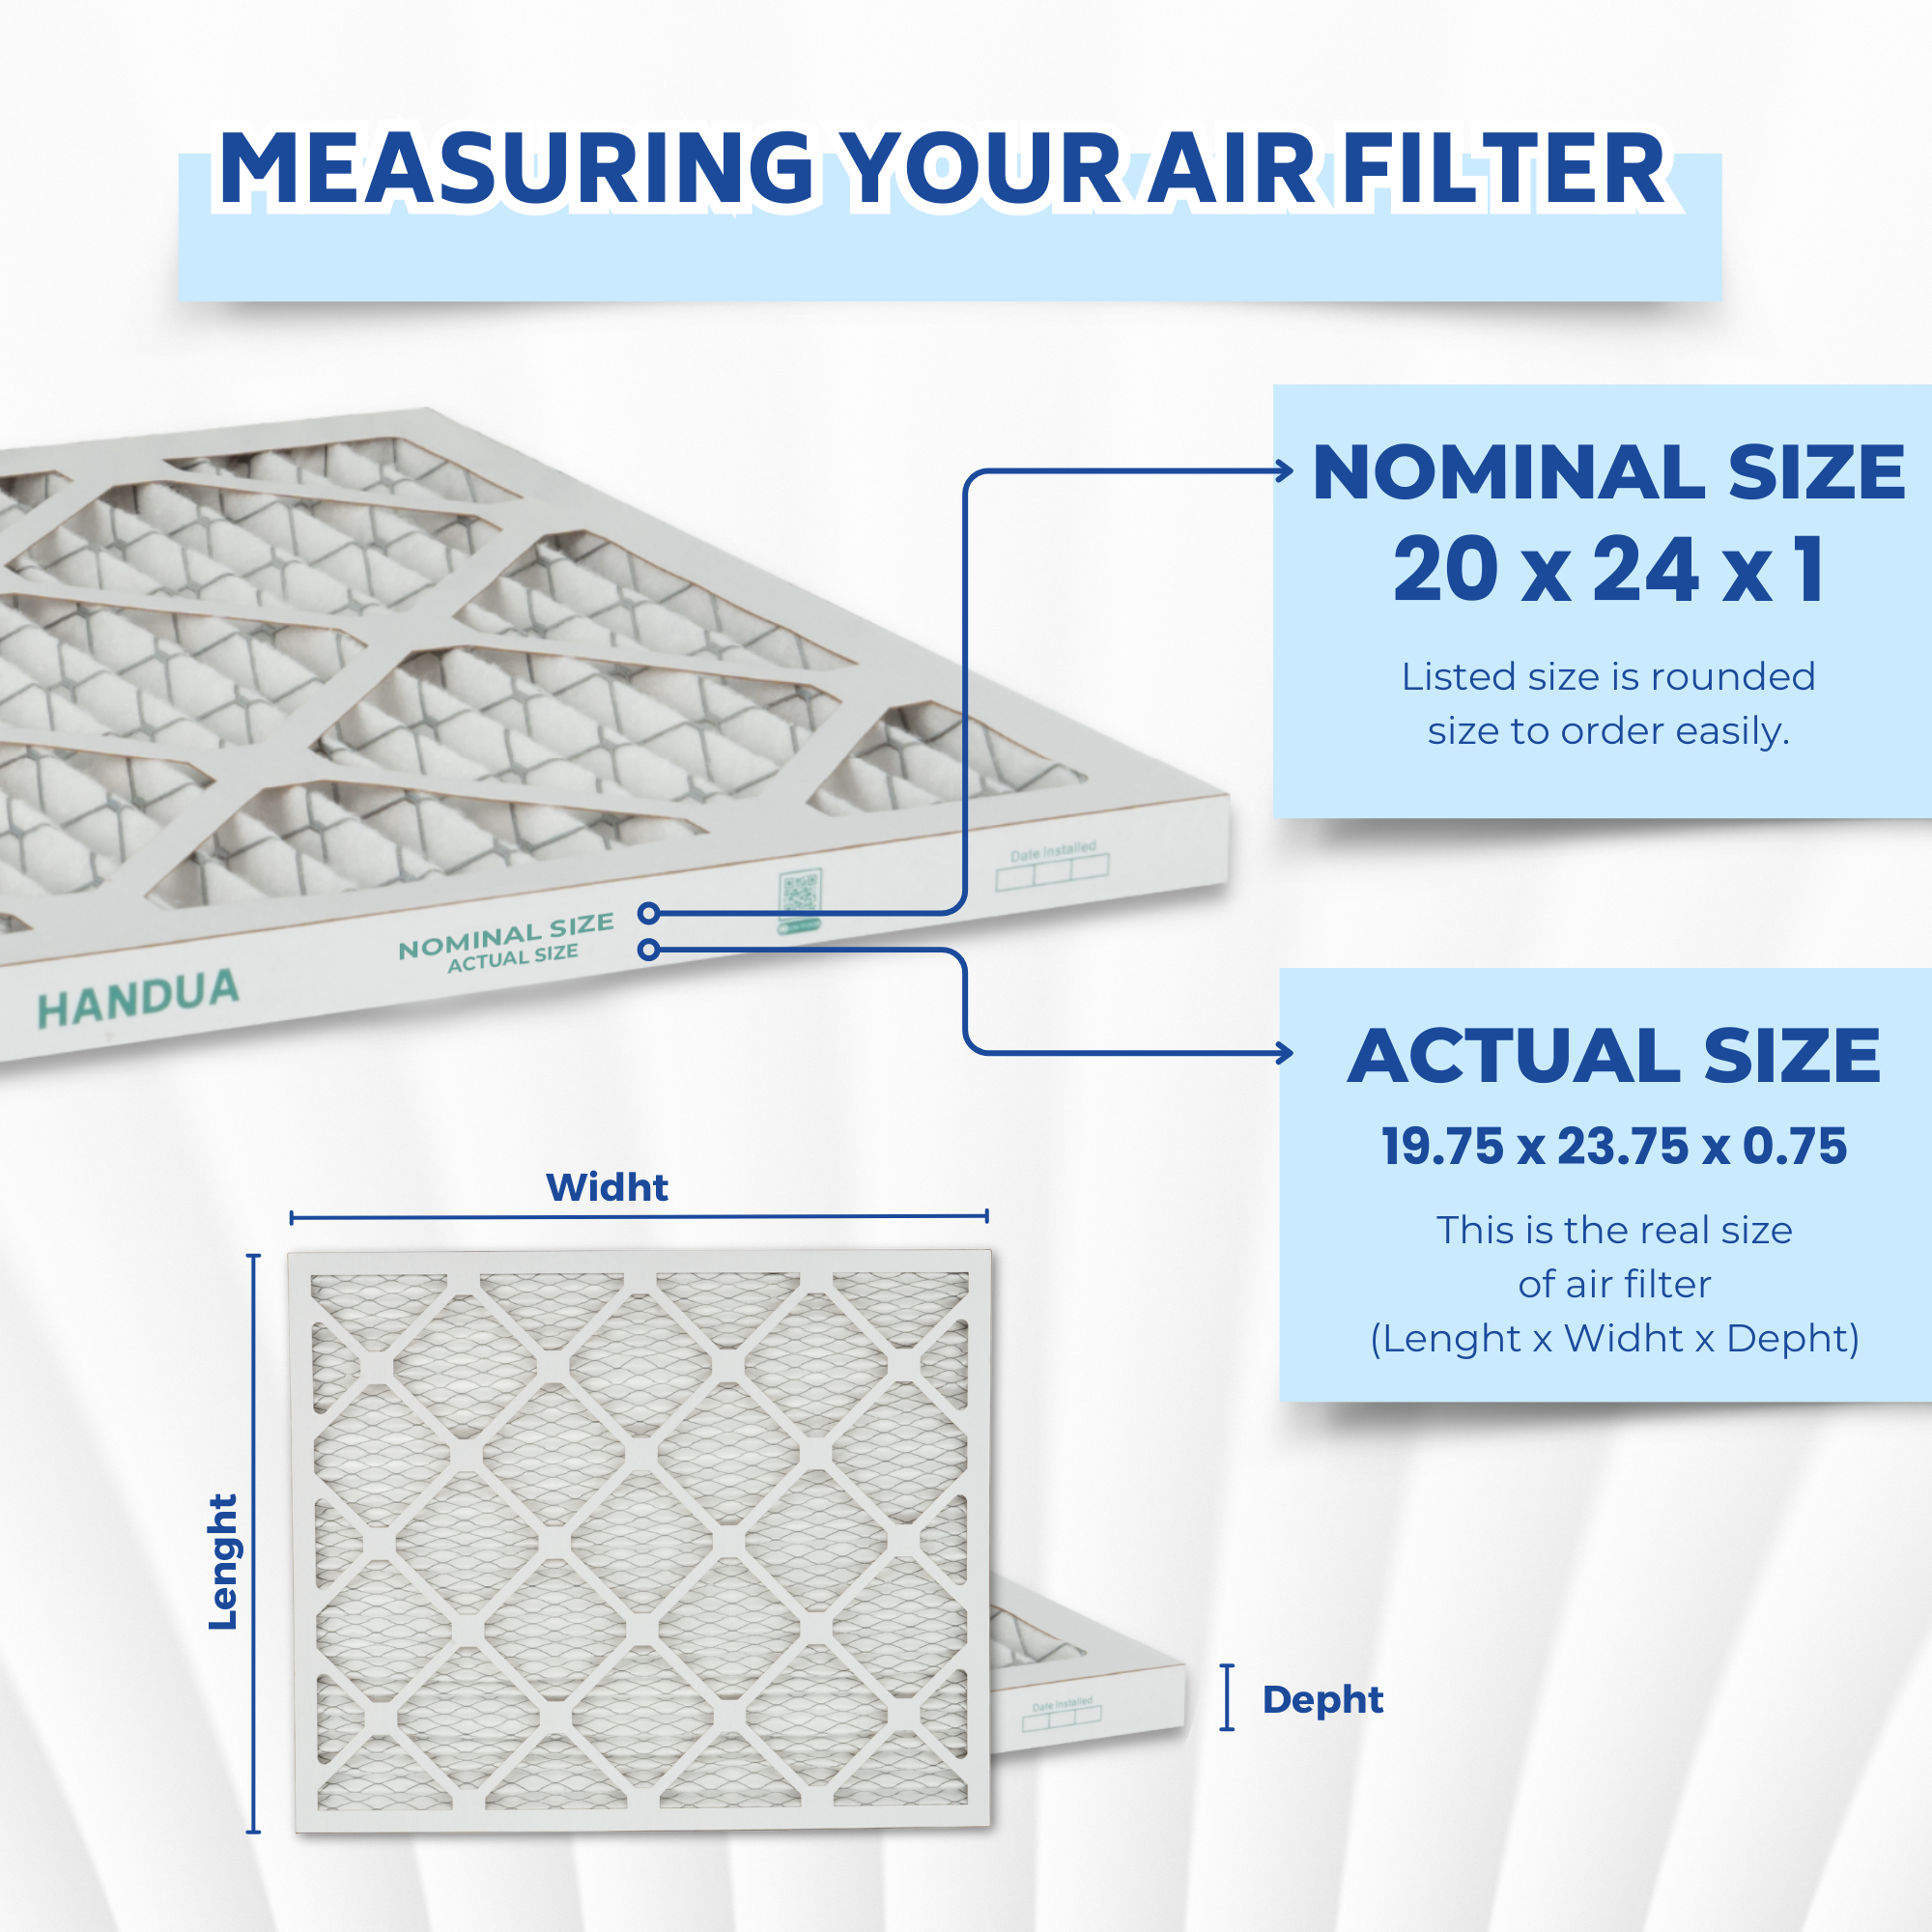 Handua 20x24x1 Air Filter MERV 11 Allergen Control, Plated Furnace AC Air Replacement Filter, 4 Pack (Actual Size: 19.75" x 23.75" x 0.75")